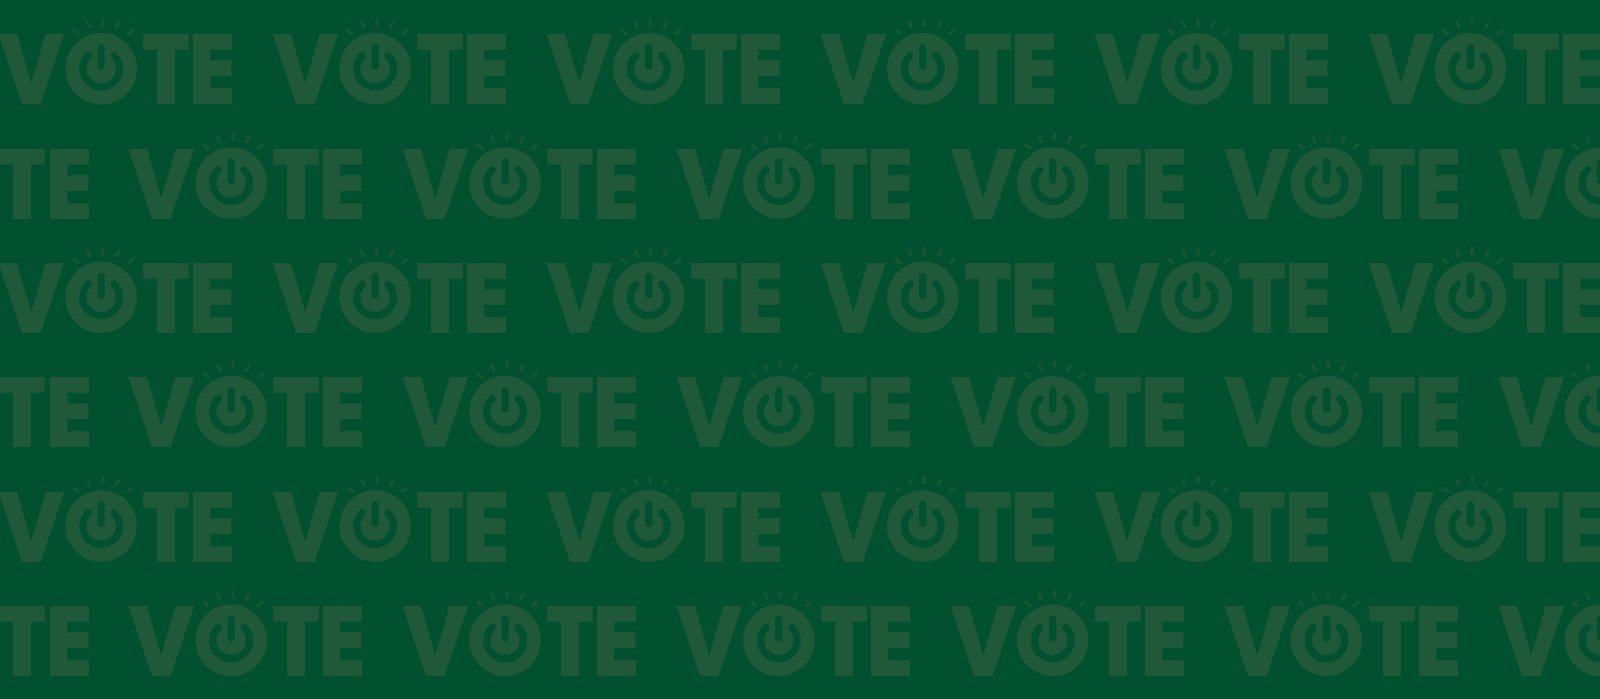 Voto logo repeated